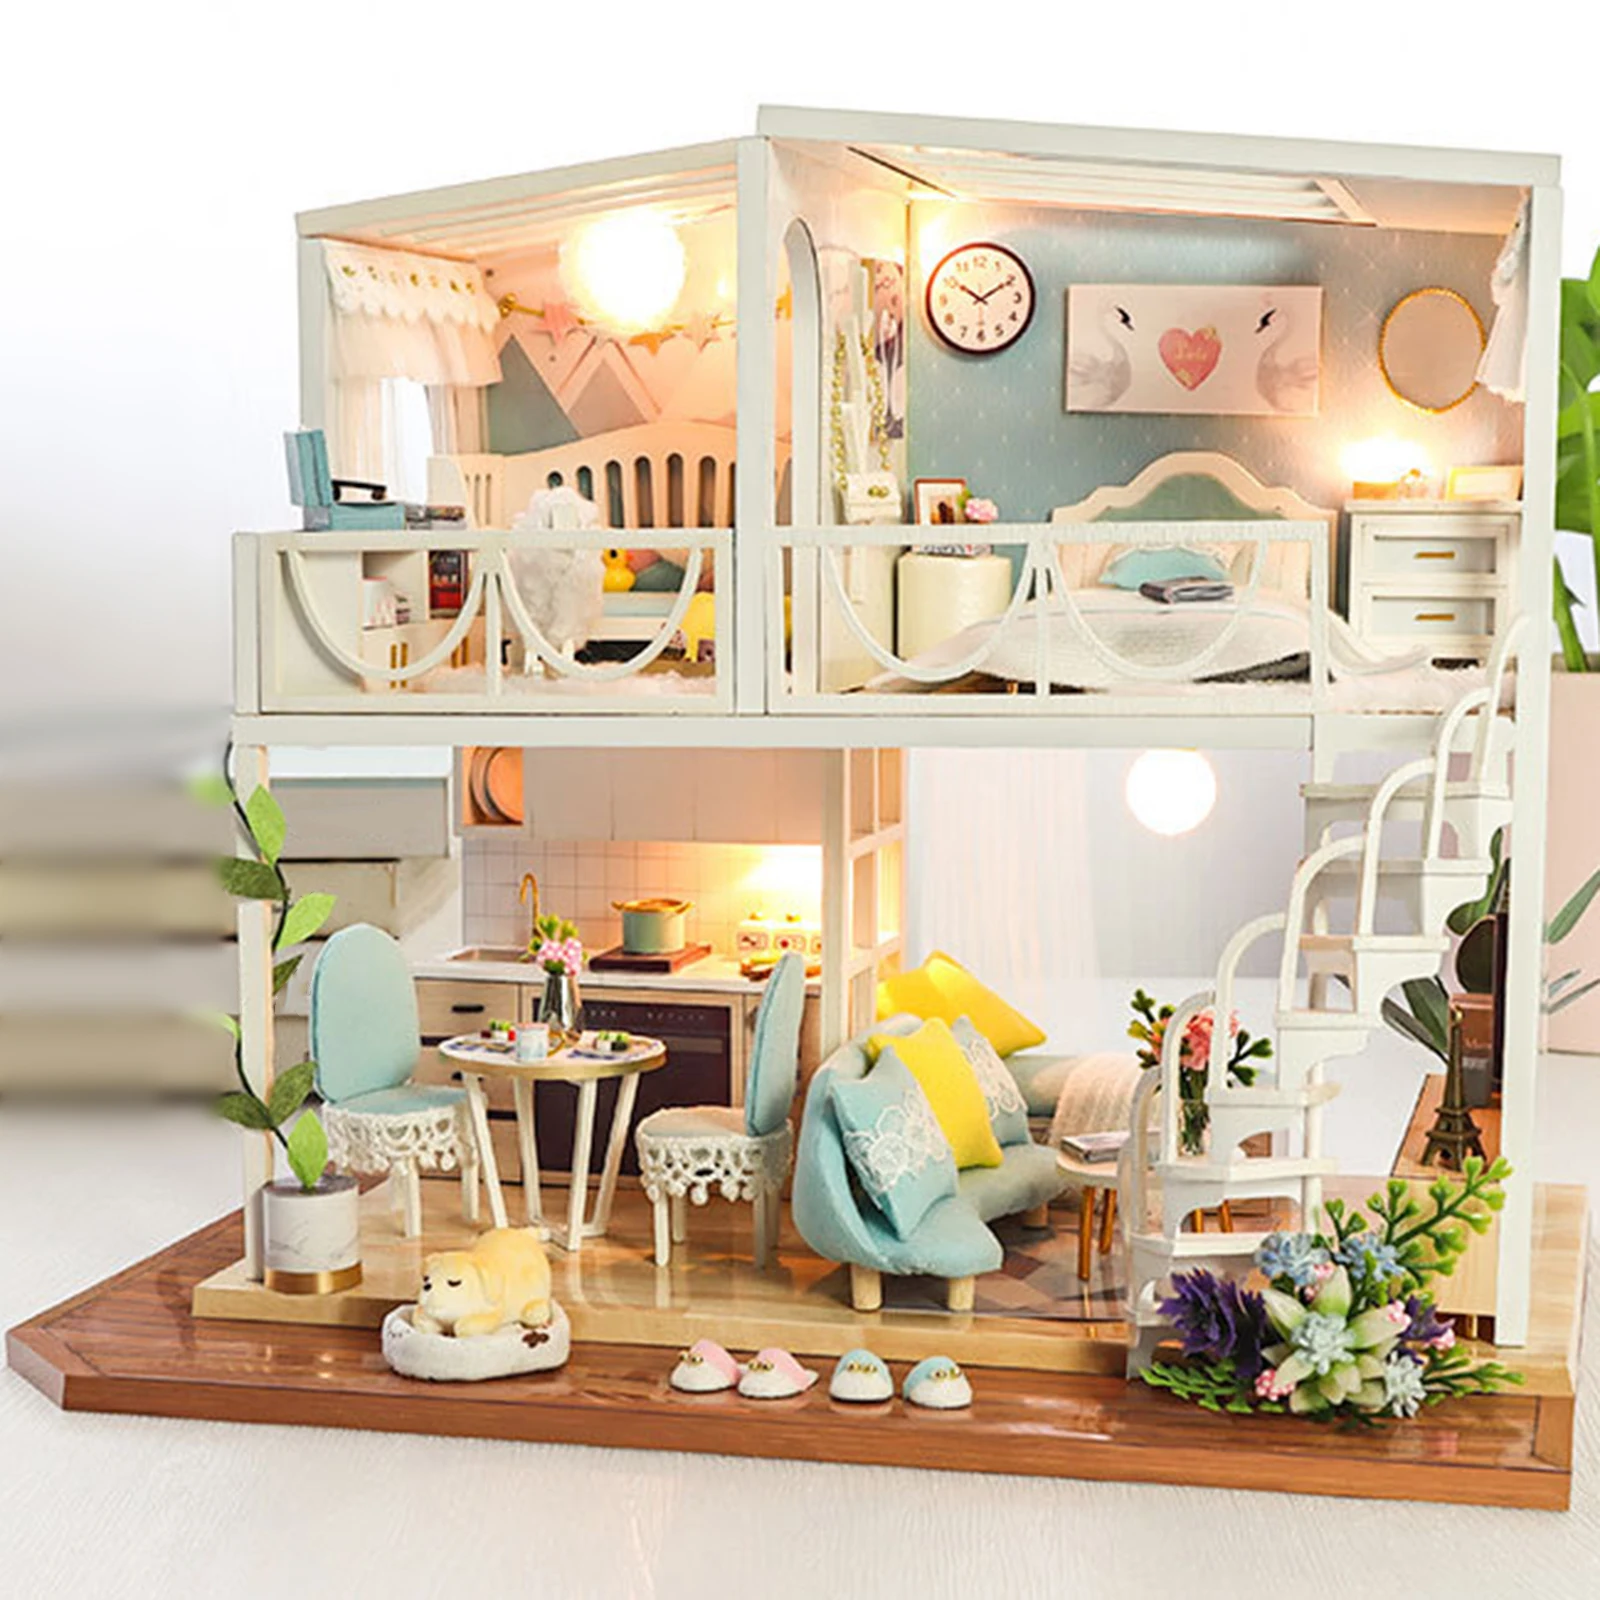 Doll House Decor Accessory Kids Home Toys DIY Miniature Doll House DIY Dollhouse Gifts for Boys Girls